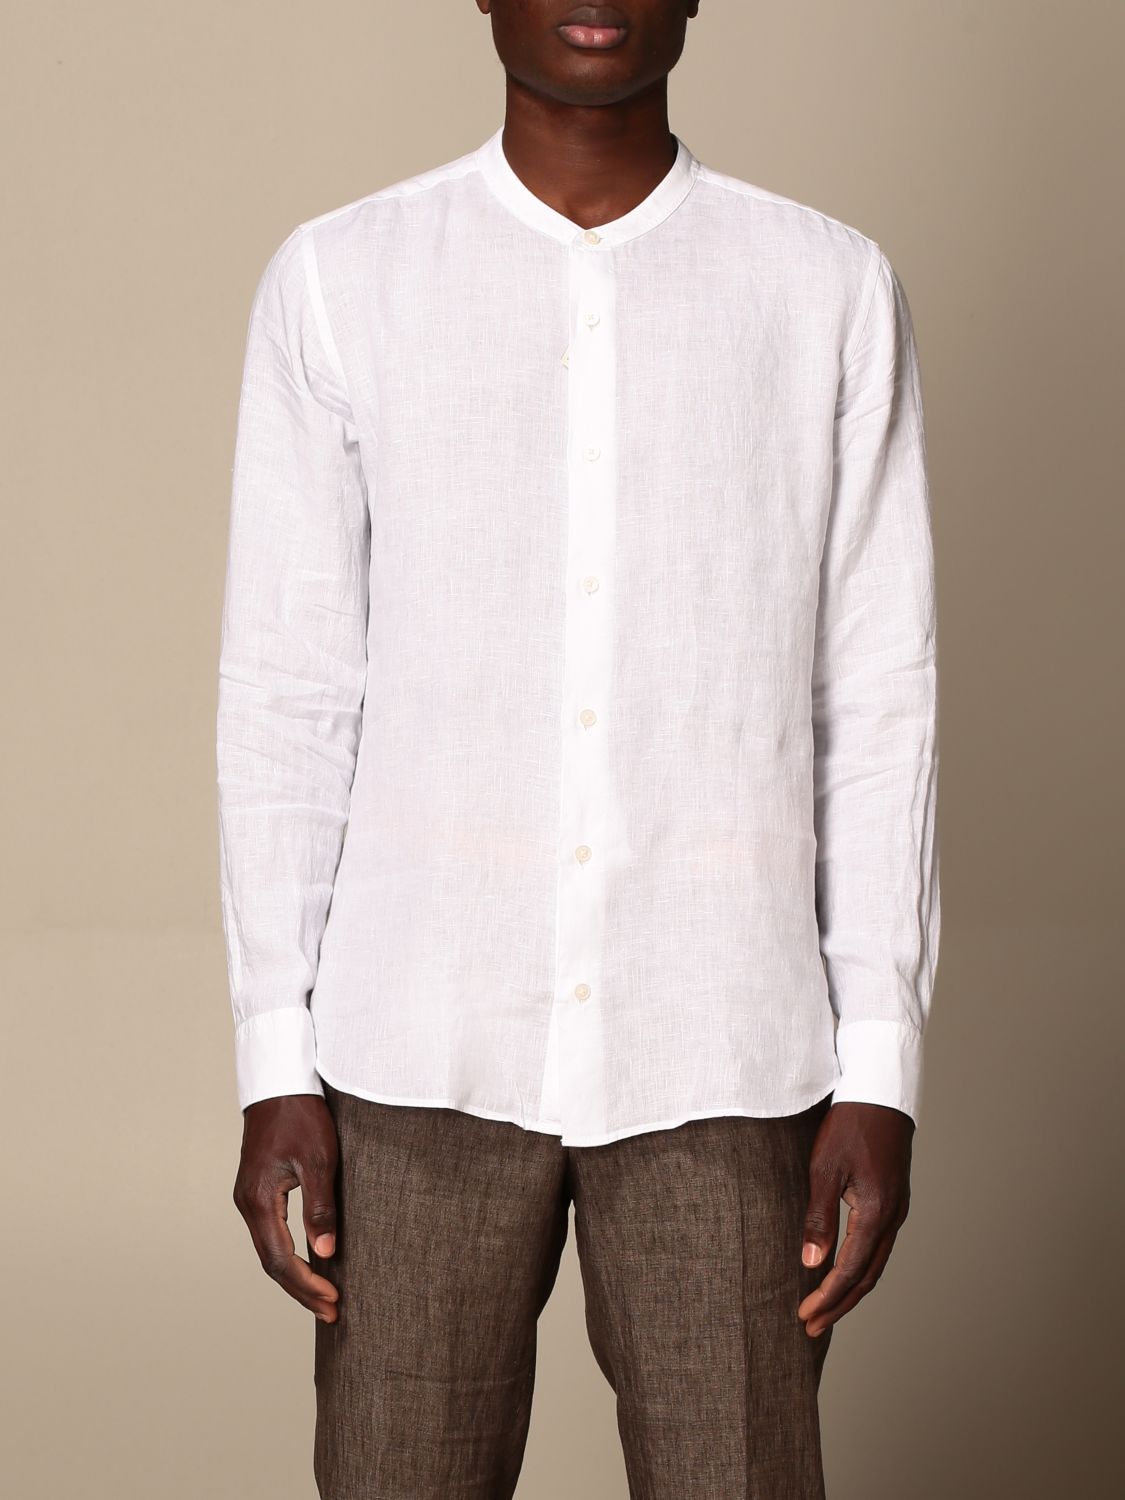 Shirt Z Zegna: Z Zegna shirt in washed linen with mandarin collar white 1